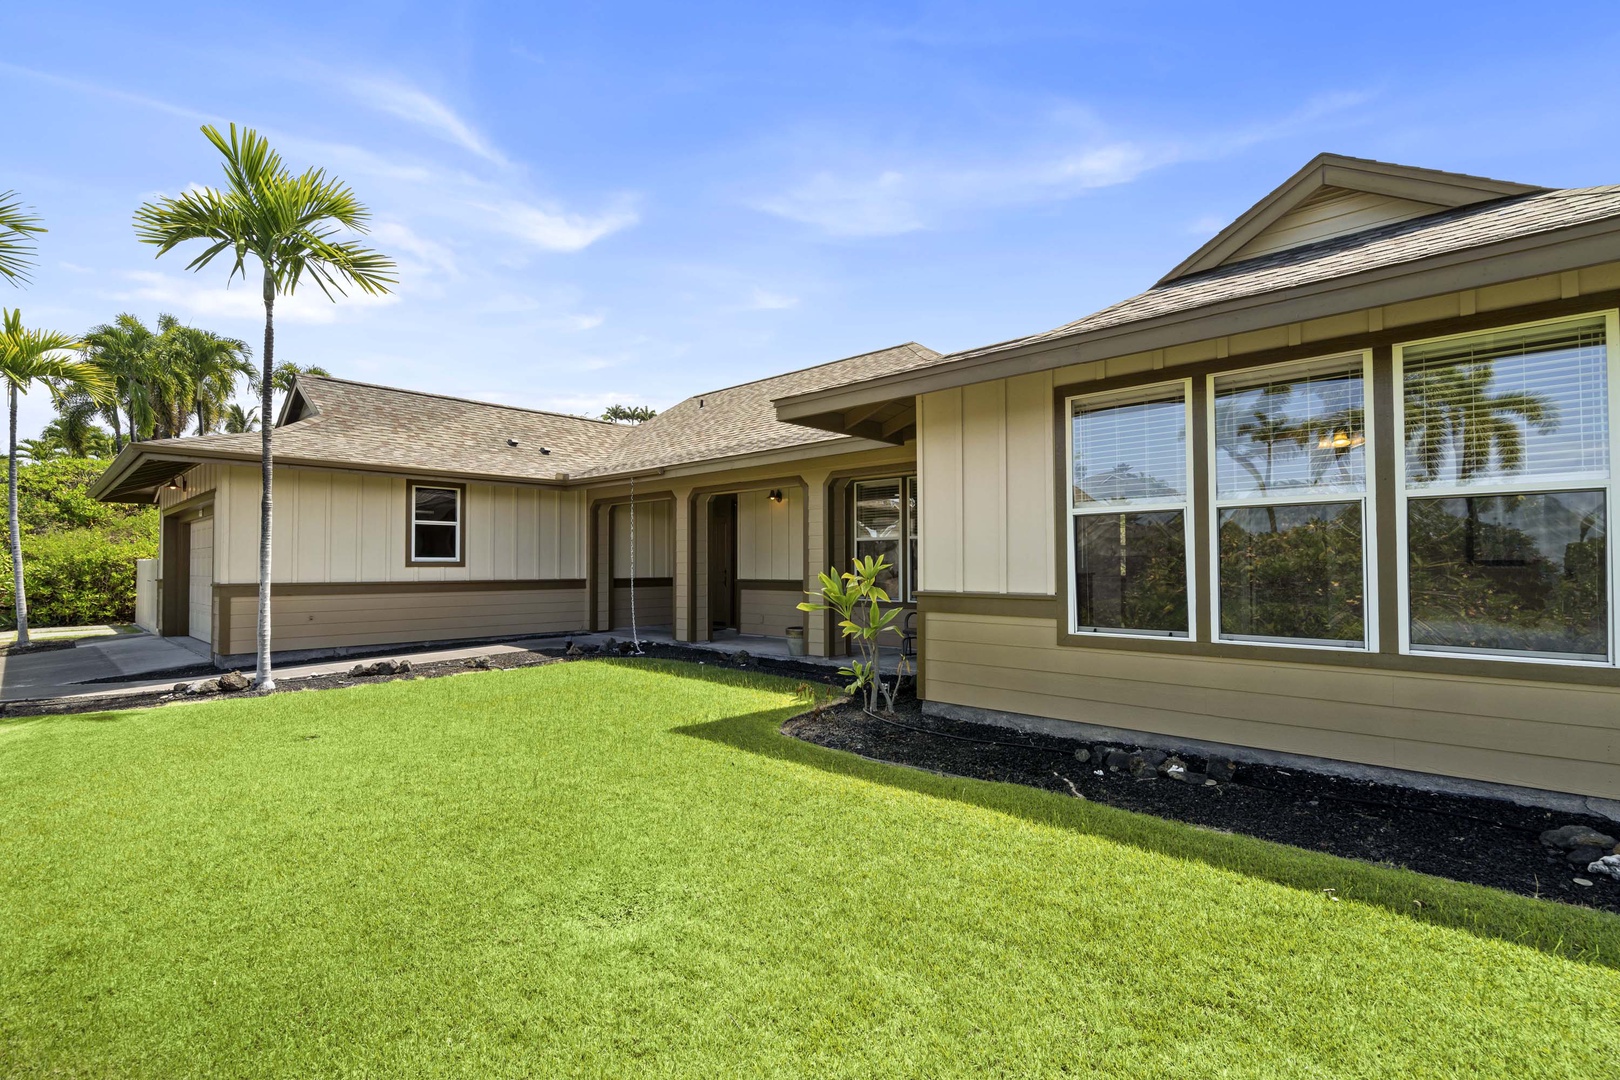 Kailua Kona Vacation Rentals, Kahakai Estates Hale - Nature's carpet: a lush and vibrant green grassy lawn.